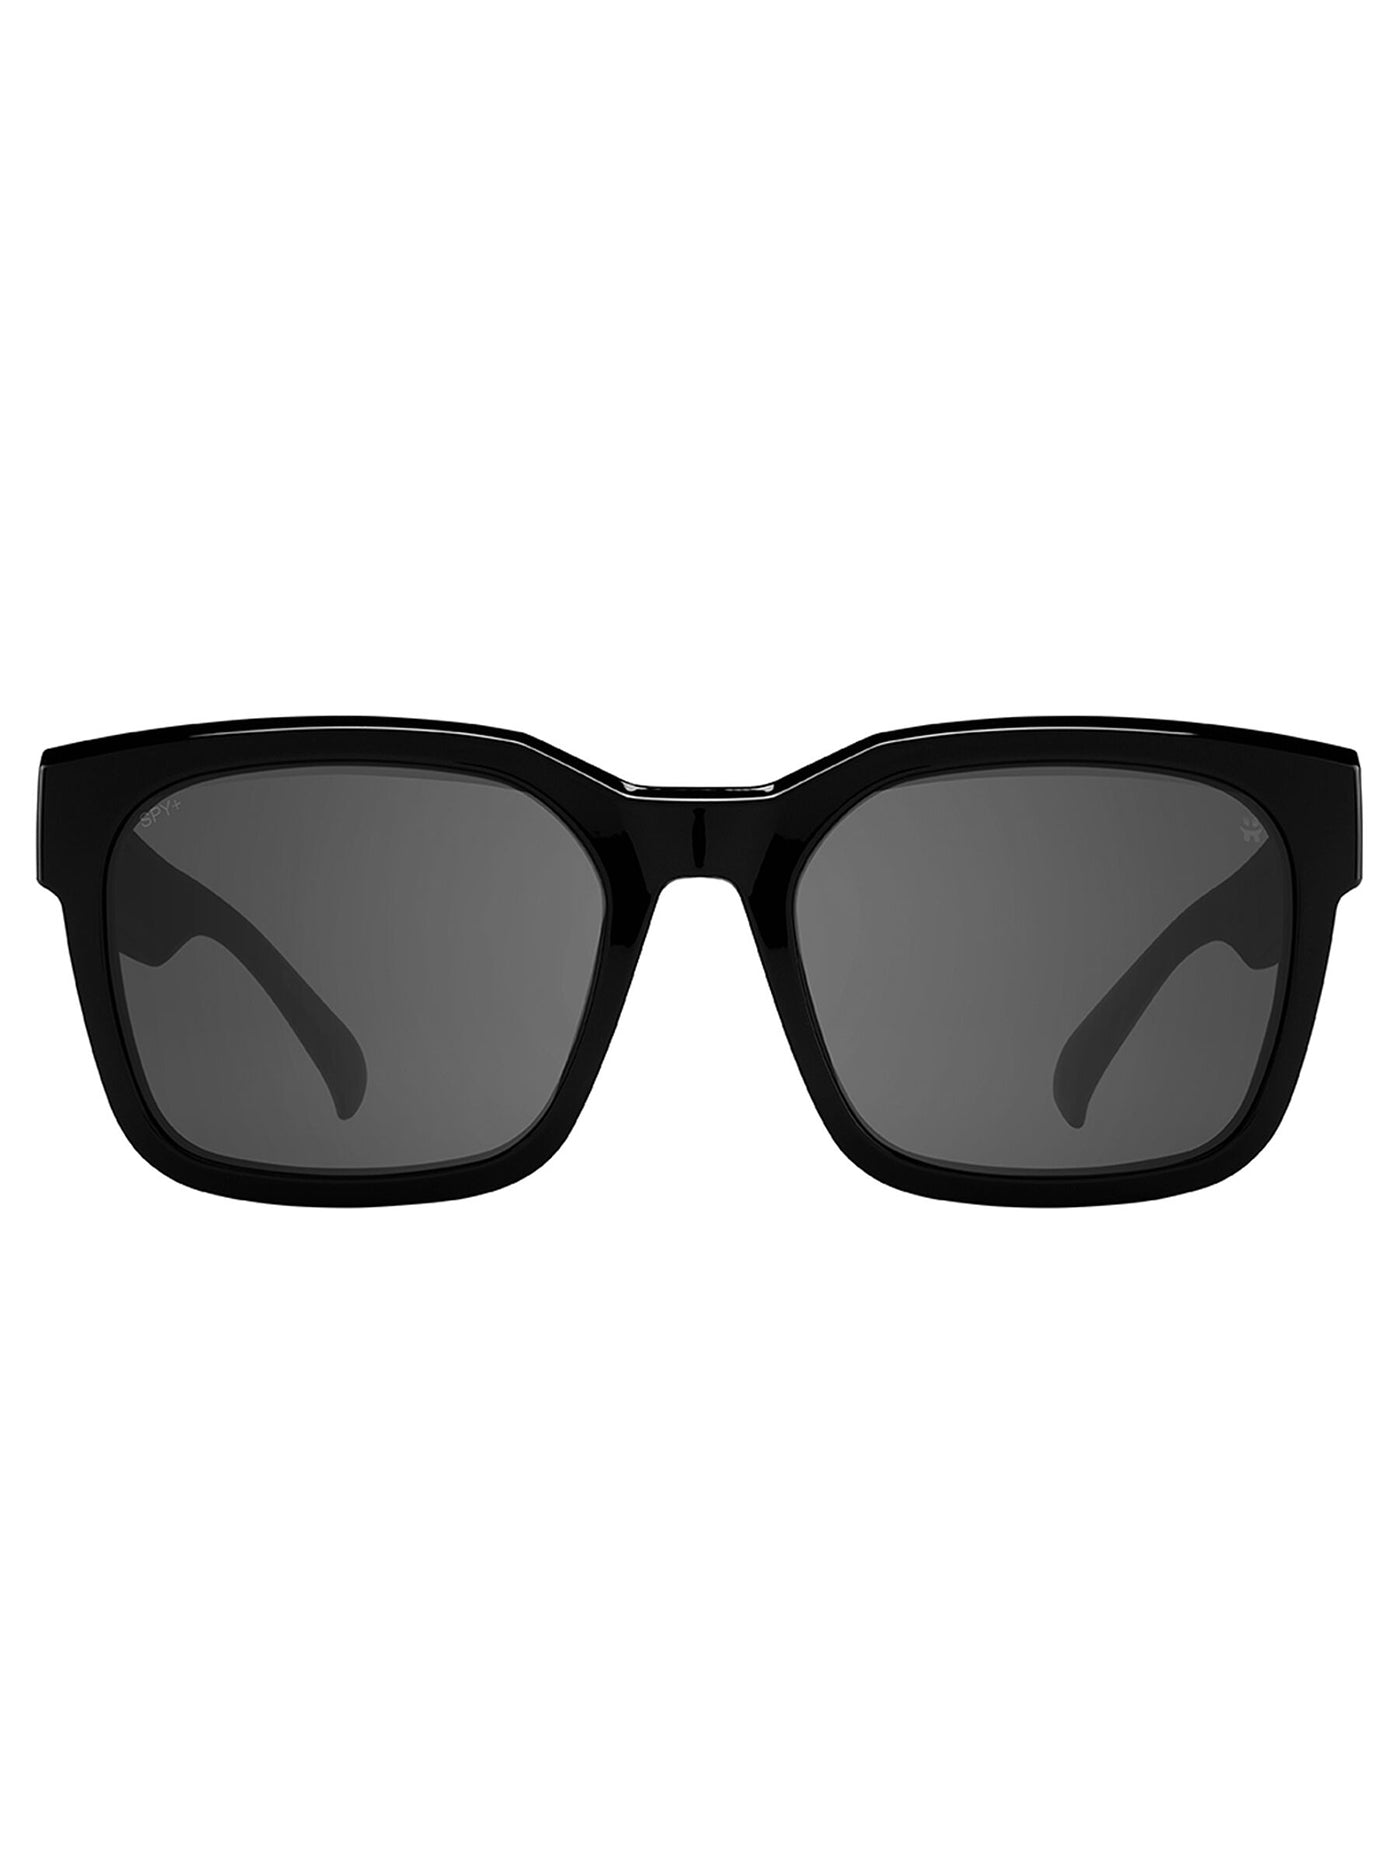 Spy Dessa Black/Gray Sunglasses